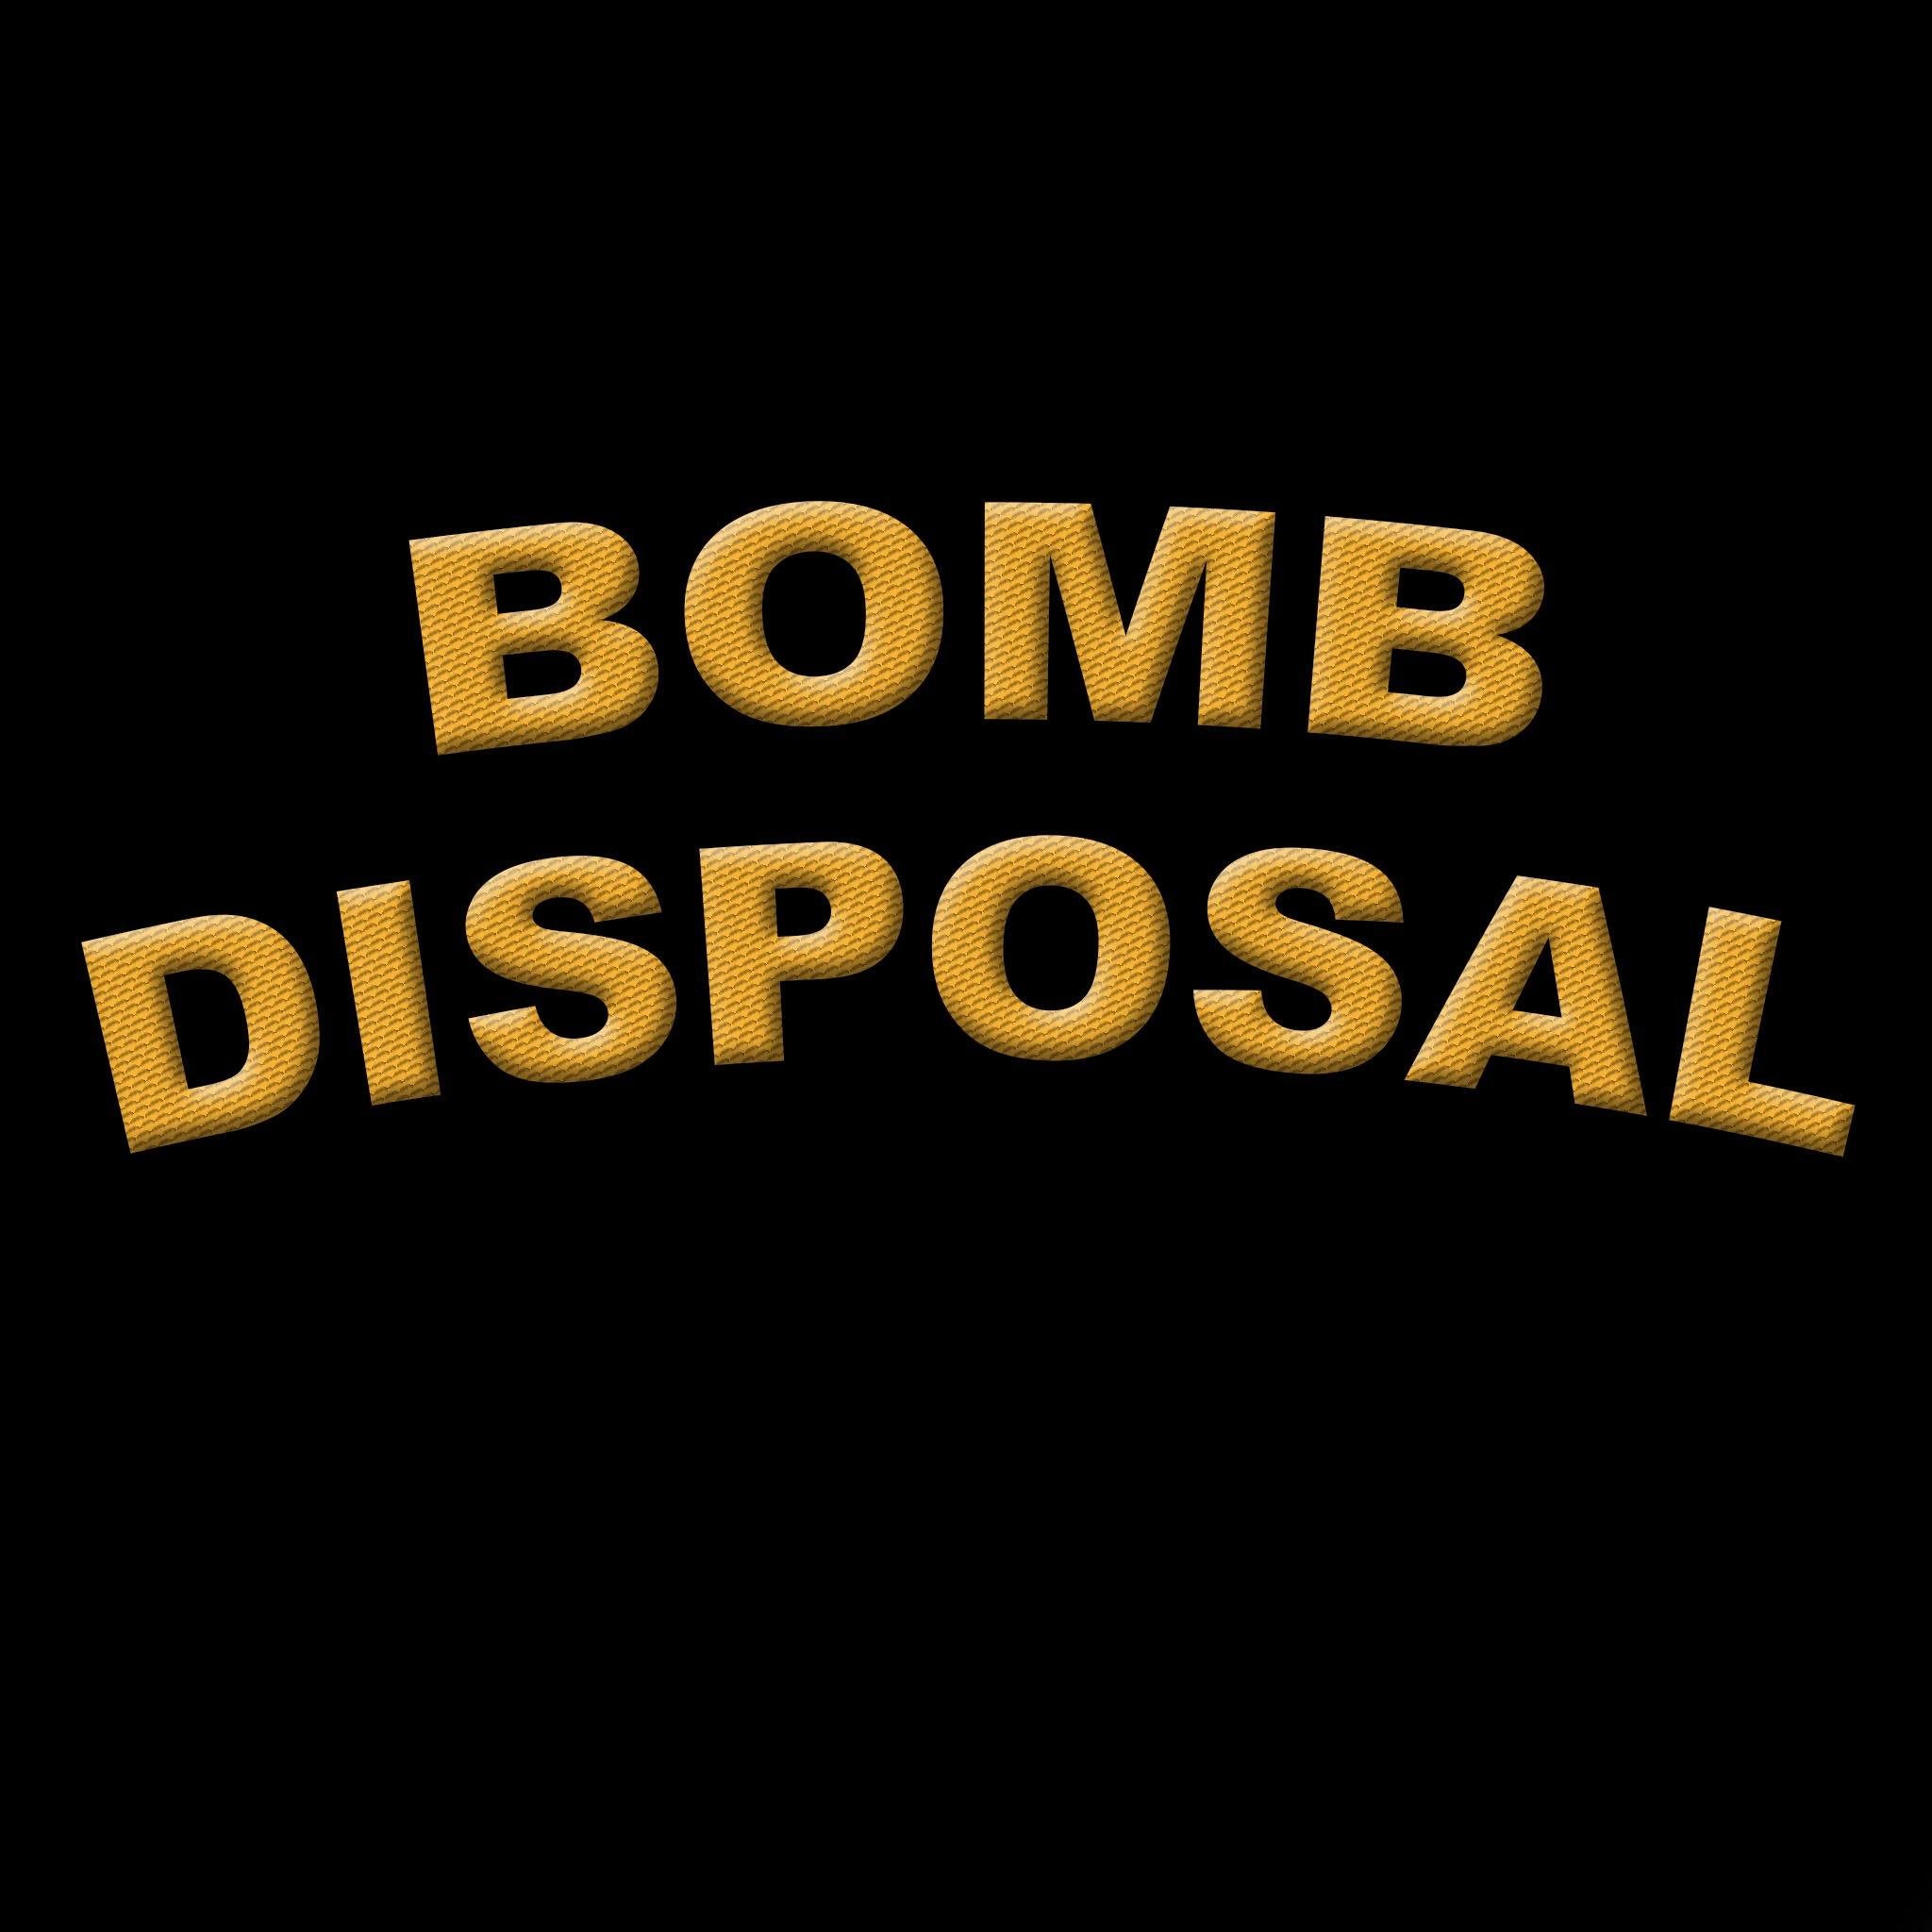 Bomb Disposal Cap - Divers Gifts